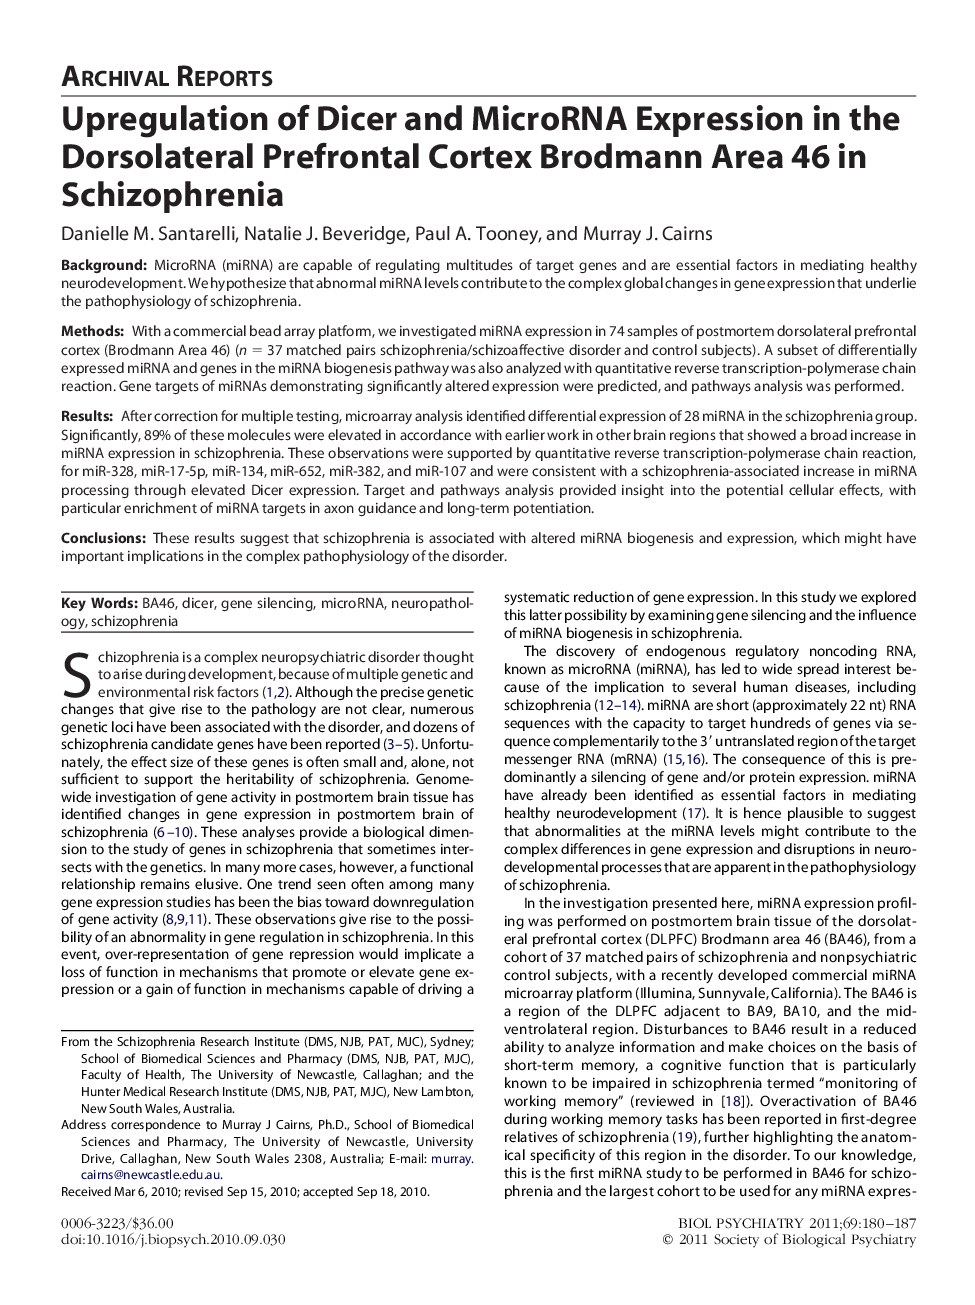 Upregulation of Dicer and MicroRNA Expression in the Dorsolateral Prefrontal Cortex Brodmann Area 46 in Schizophrenia